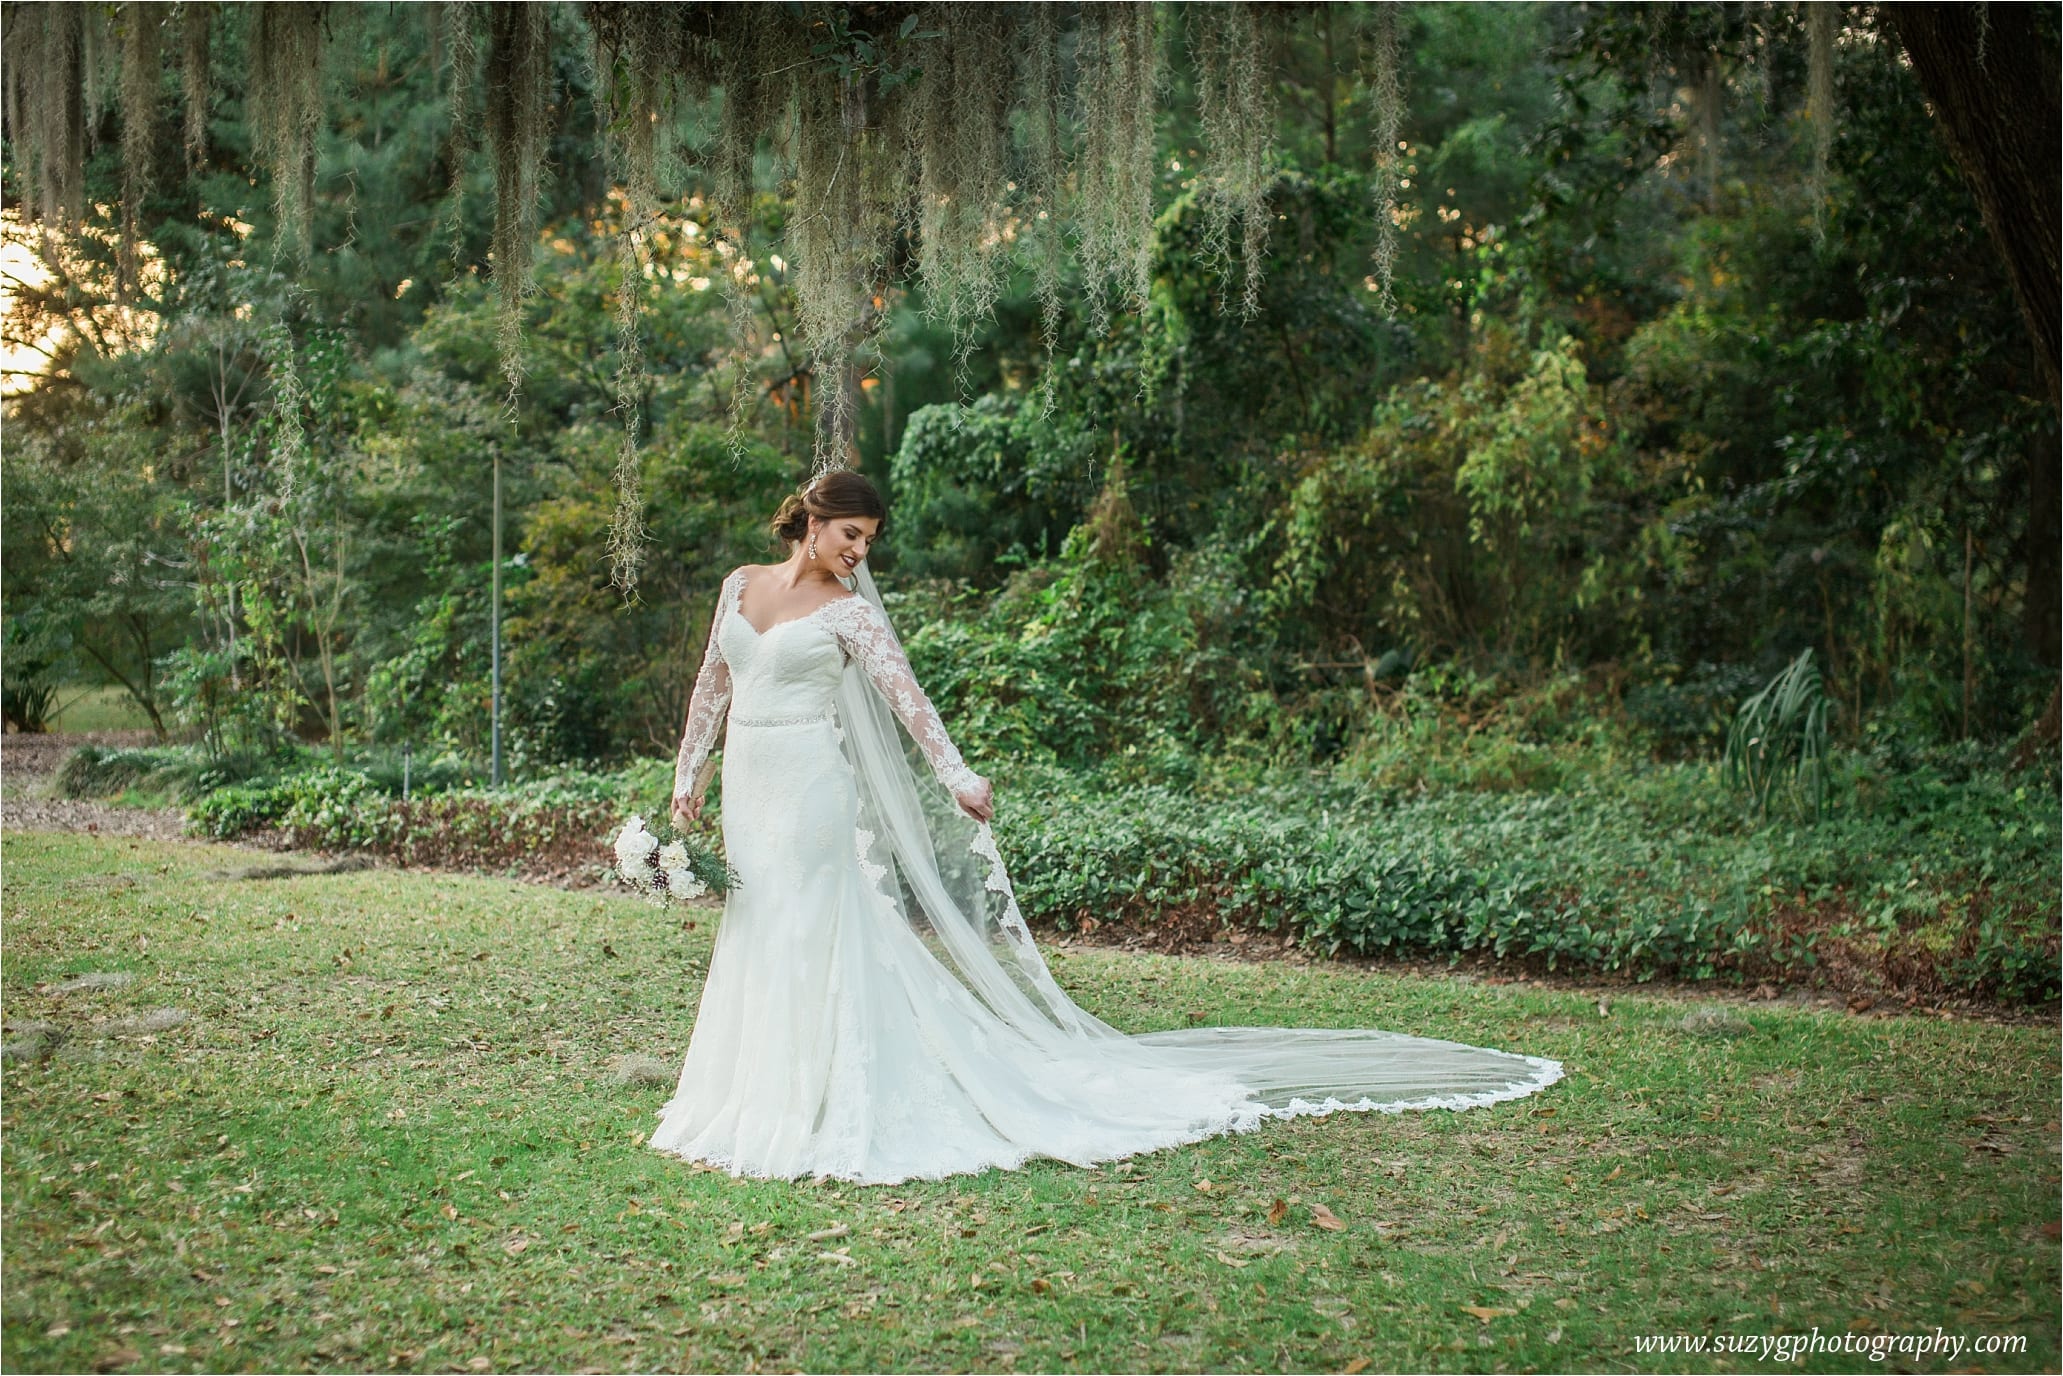 wind-rush-gardens-bridal-session-baton-rouge-suzy-g-photography-suzy-g_0025